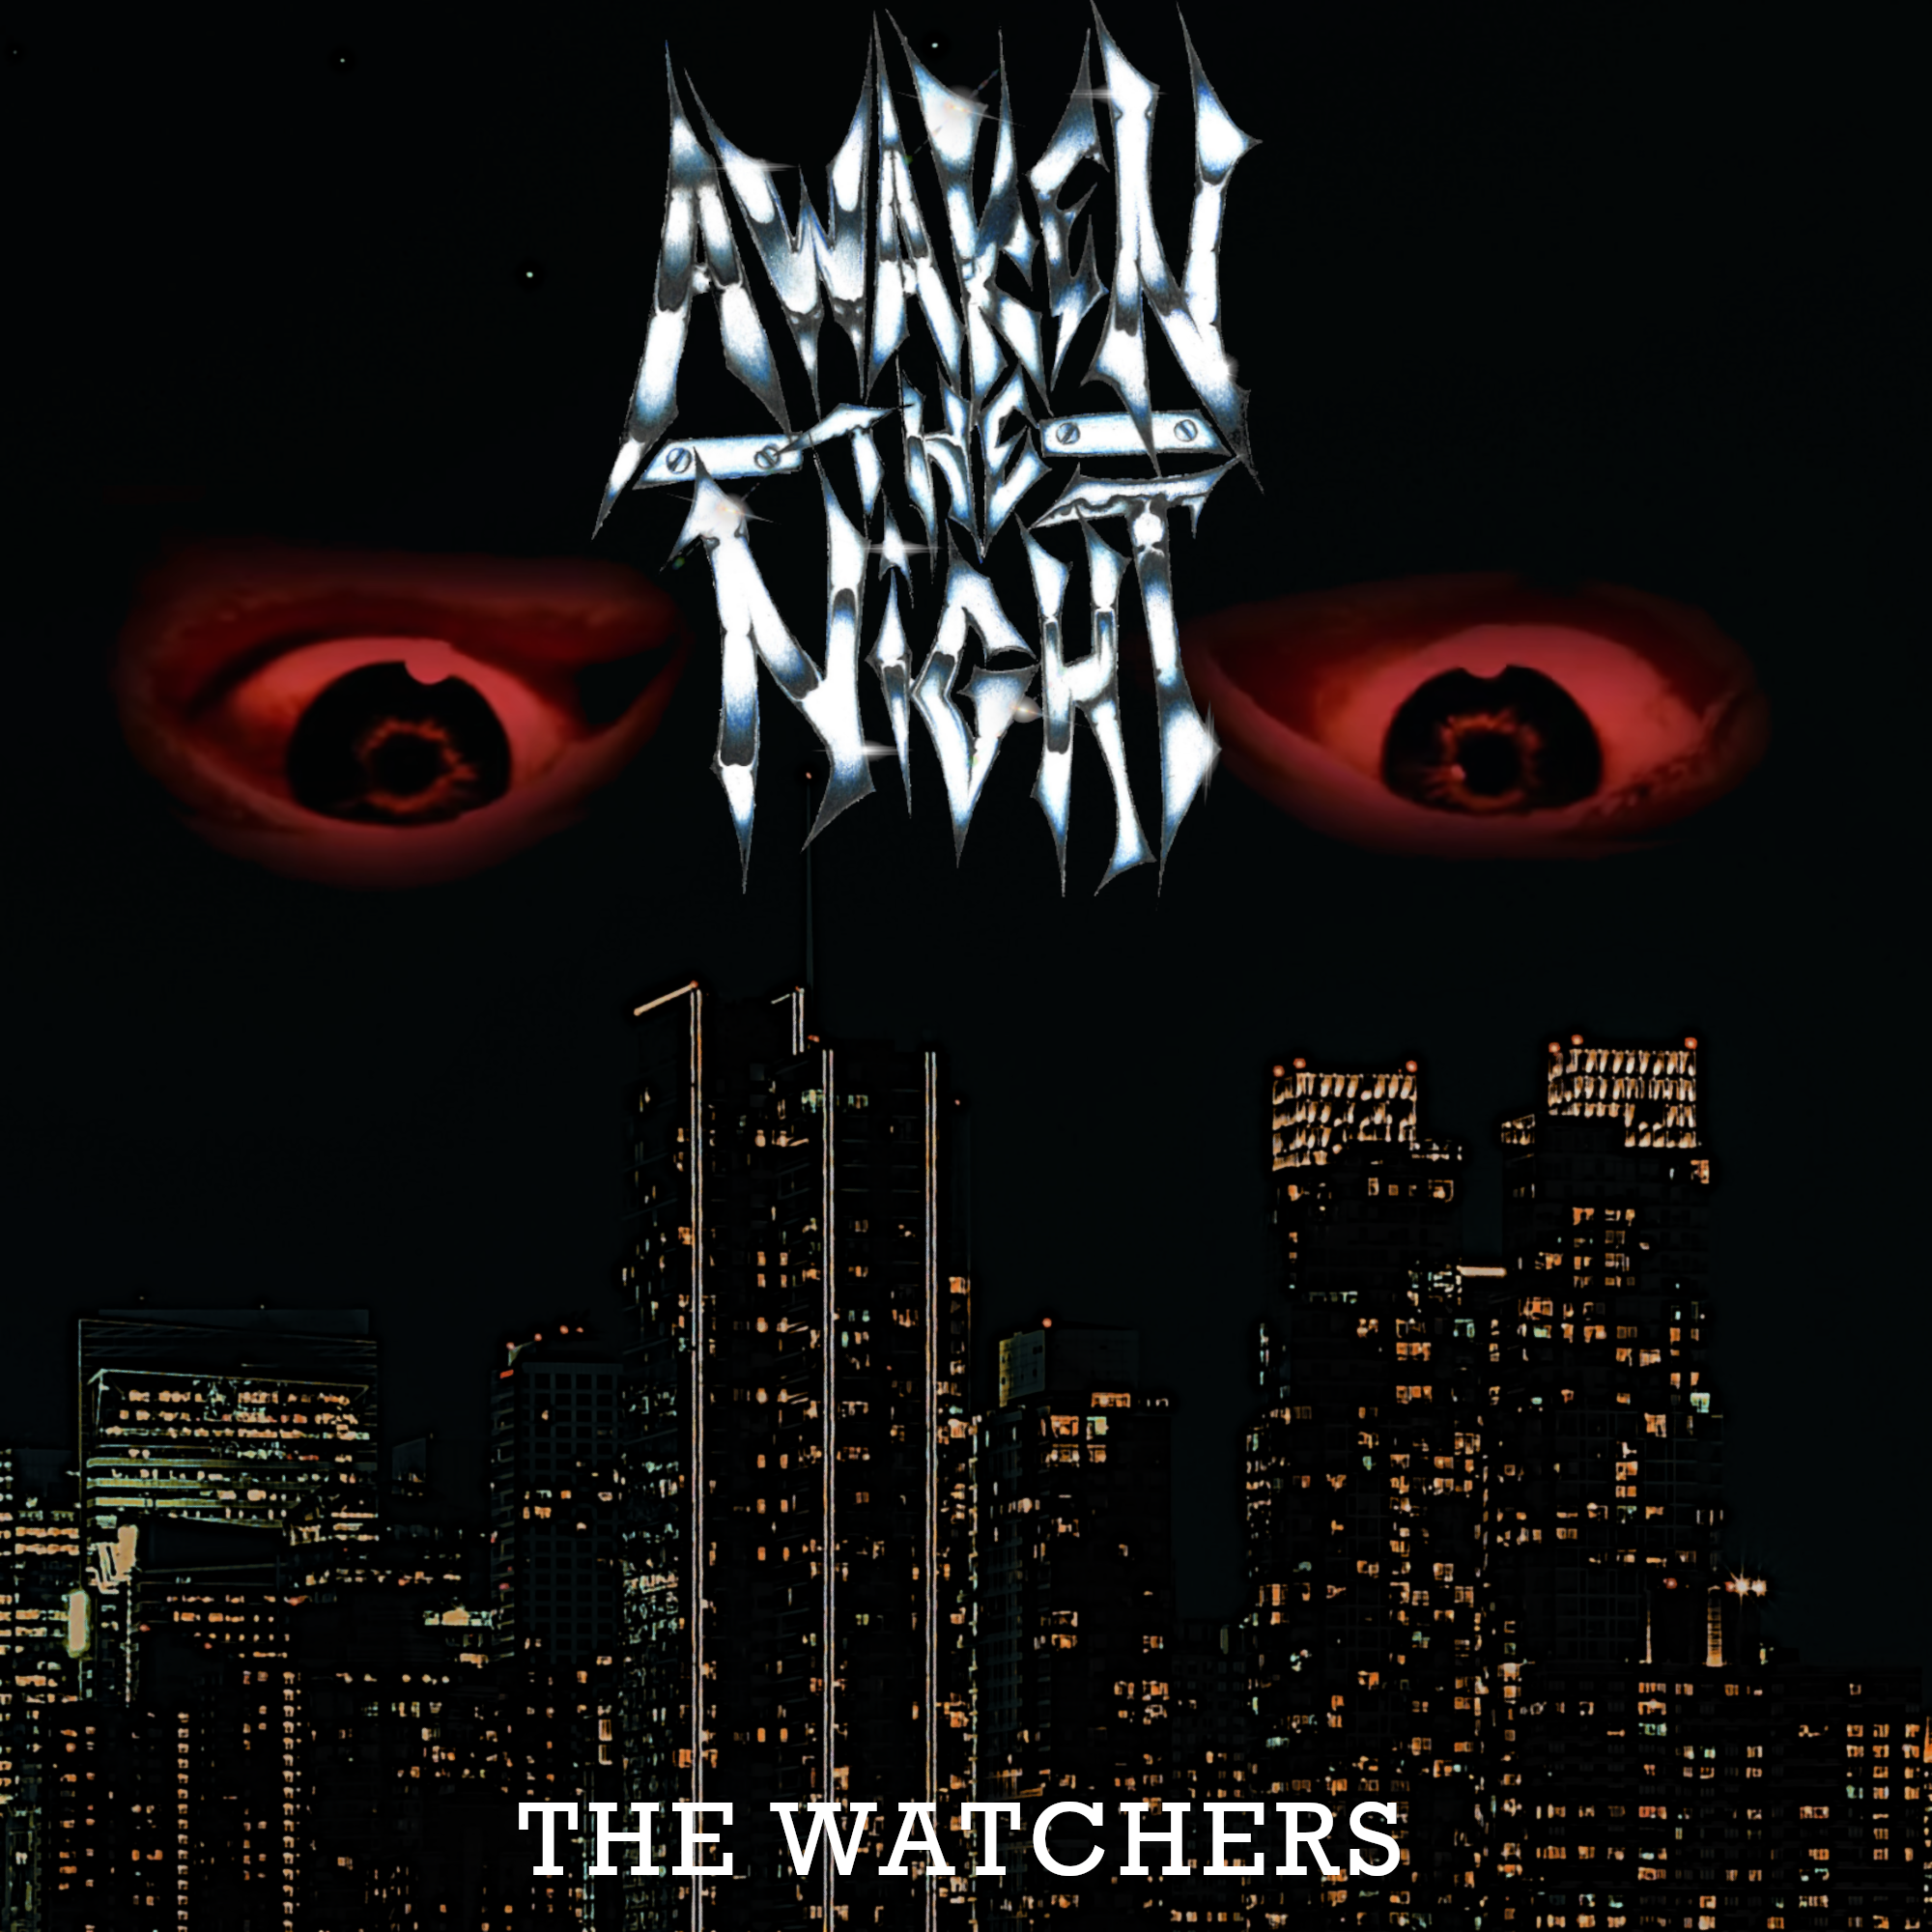 Interview with AWAKEN THE NIGHT